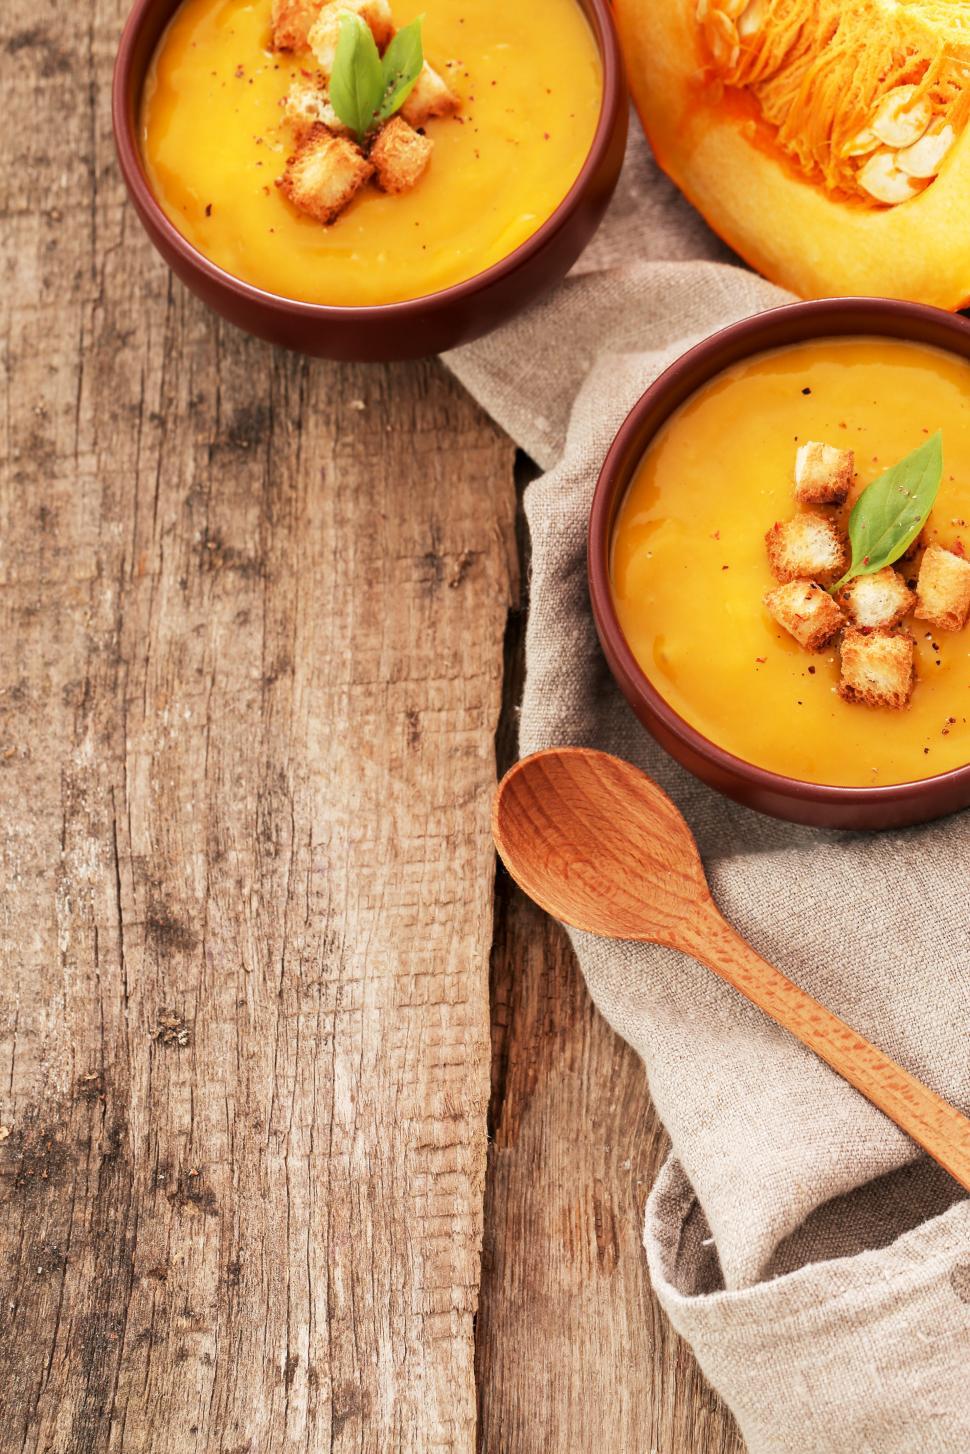 Free Image of Bowls of pumpkin soup 